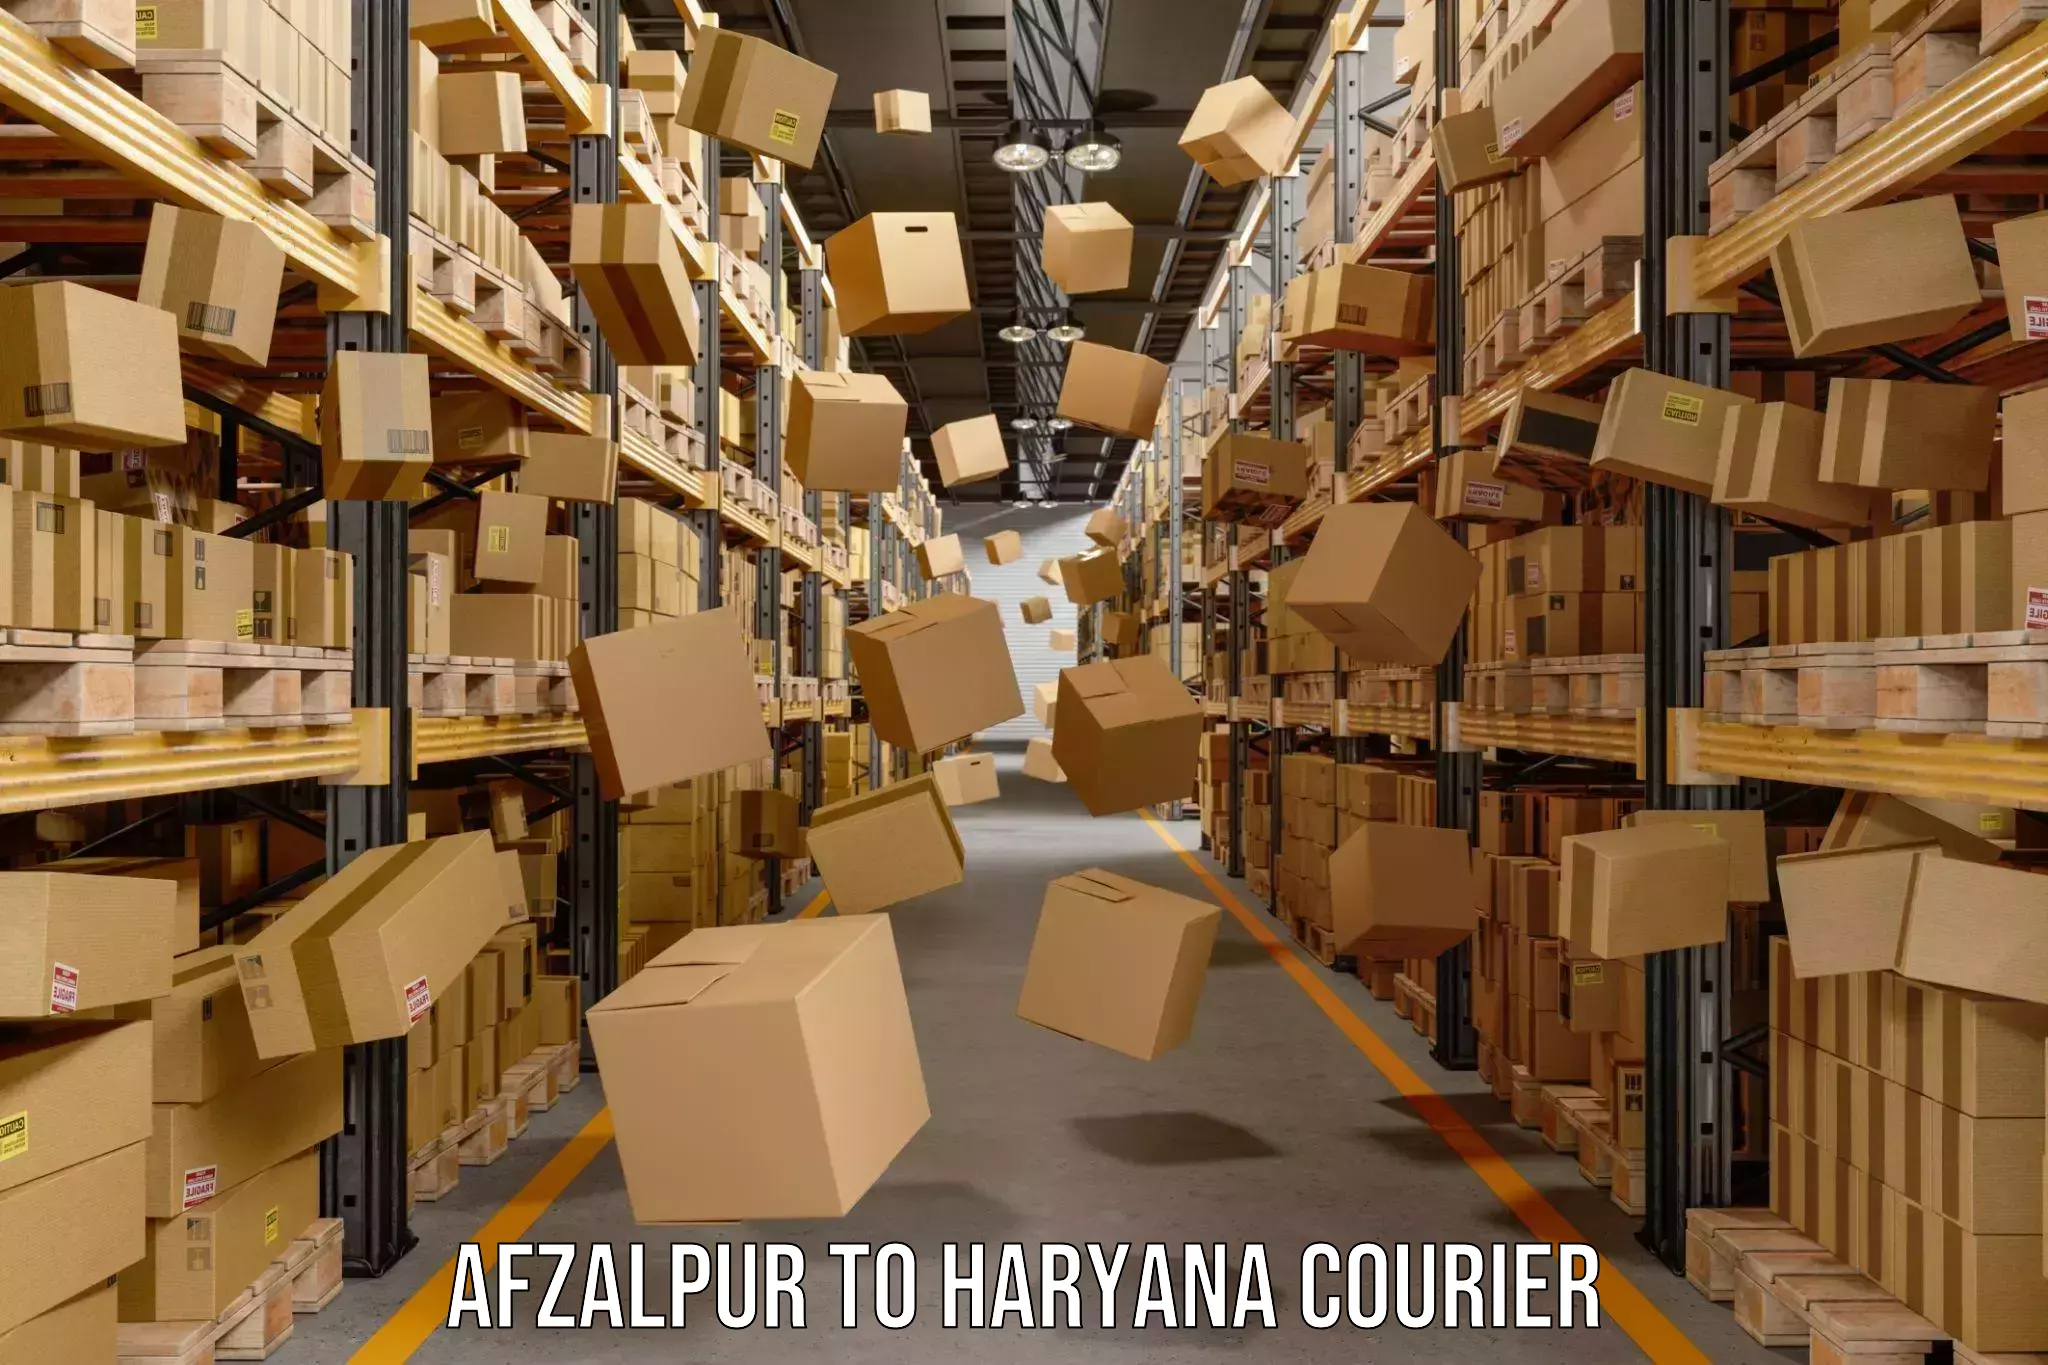 Courier service partnerships Afzalpur to Faridabad